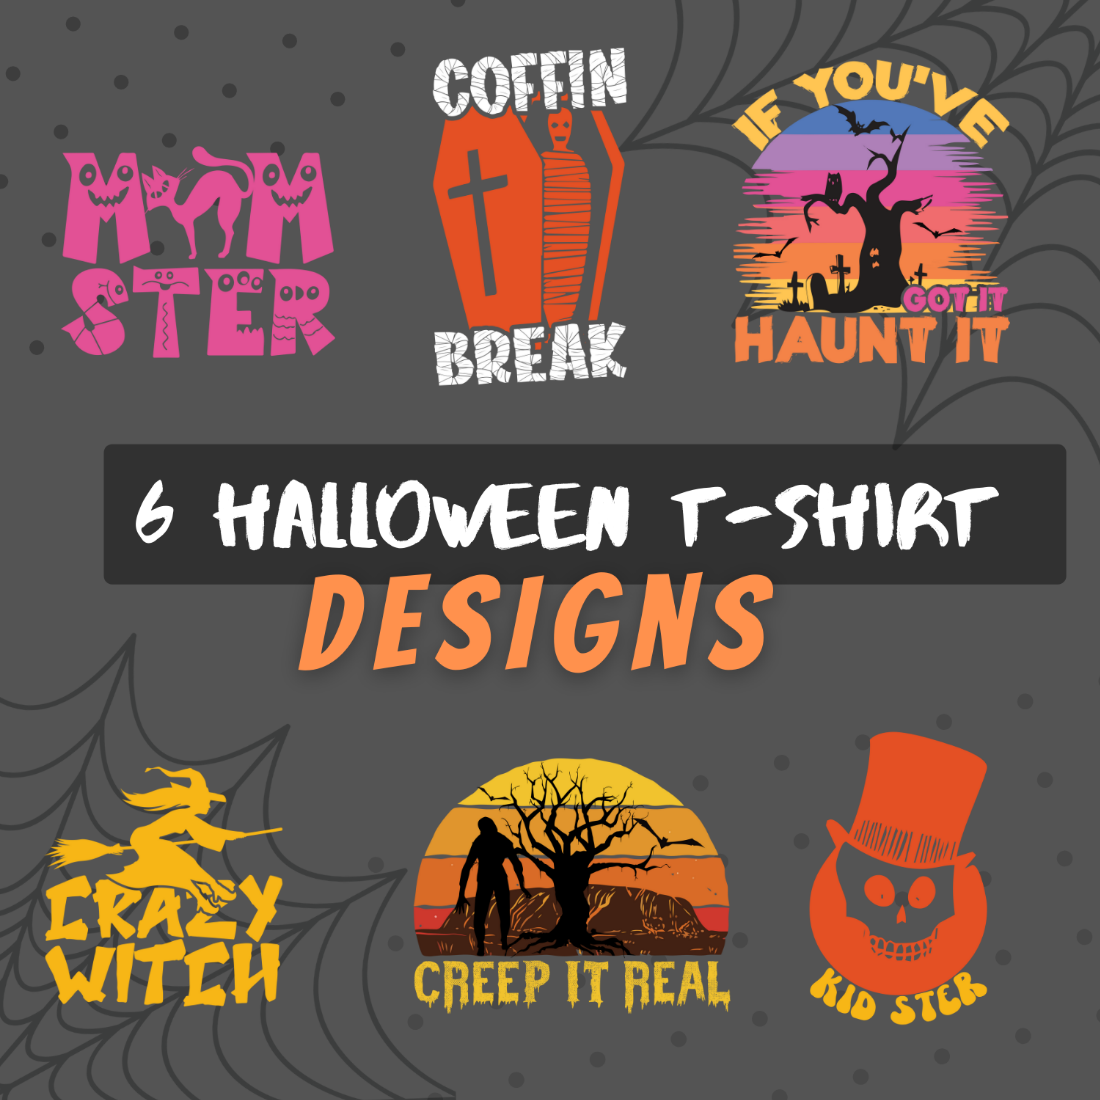 6 Halloween T-Shirt Design cover image.